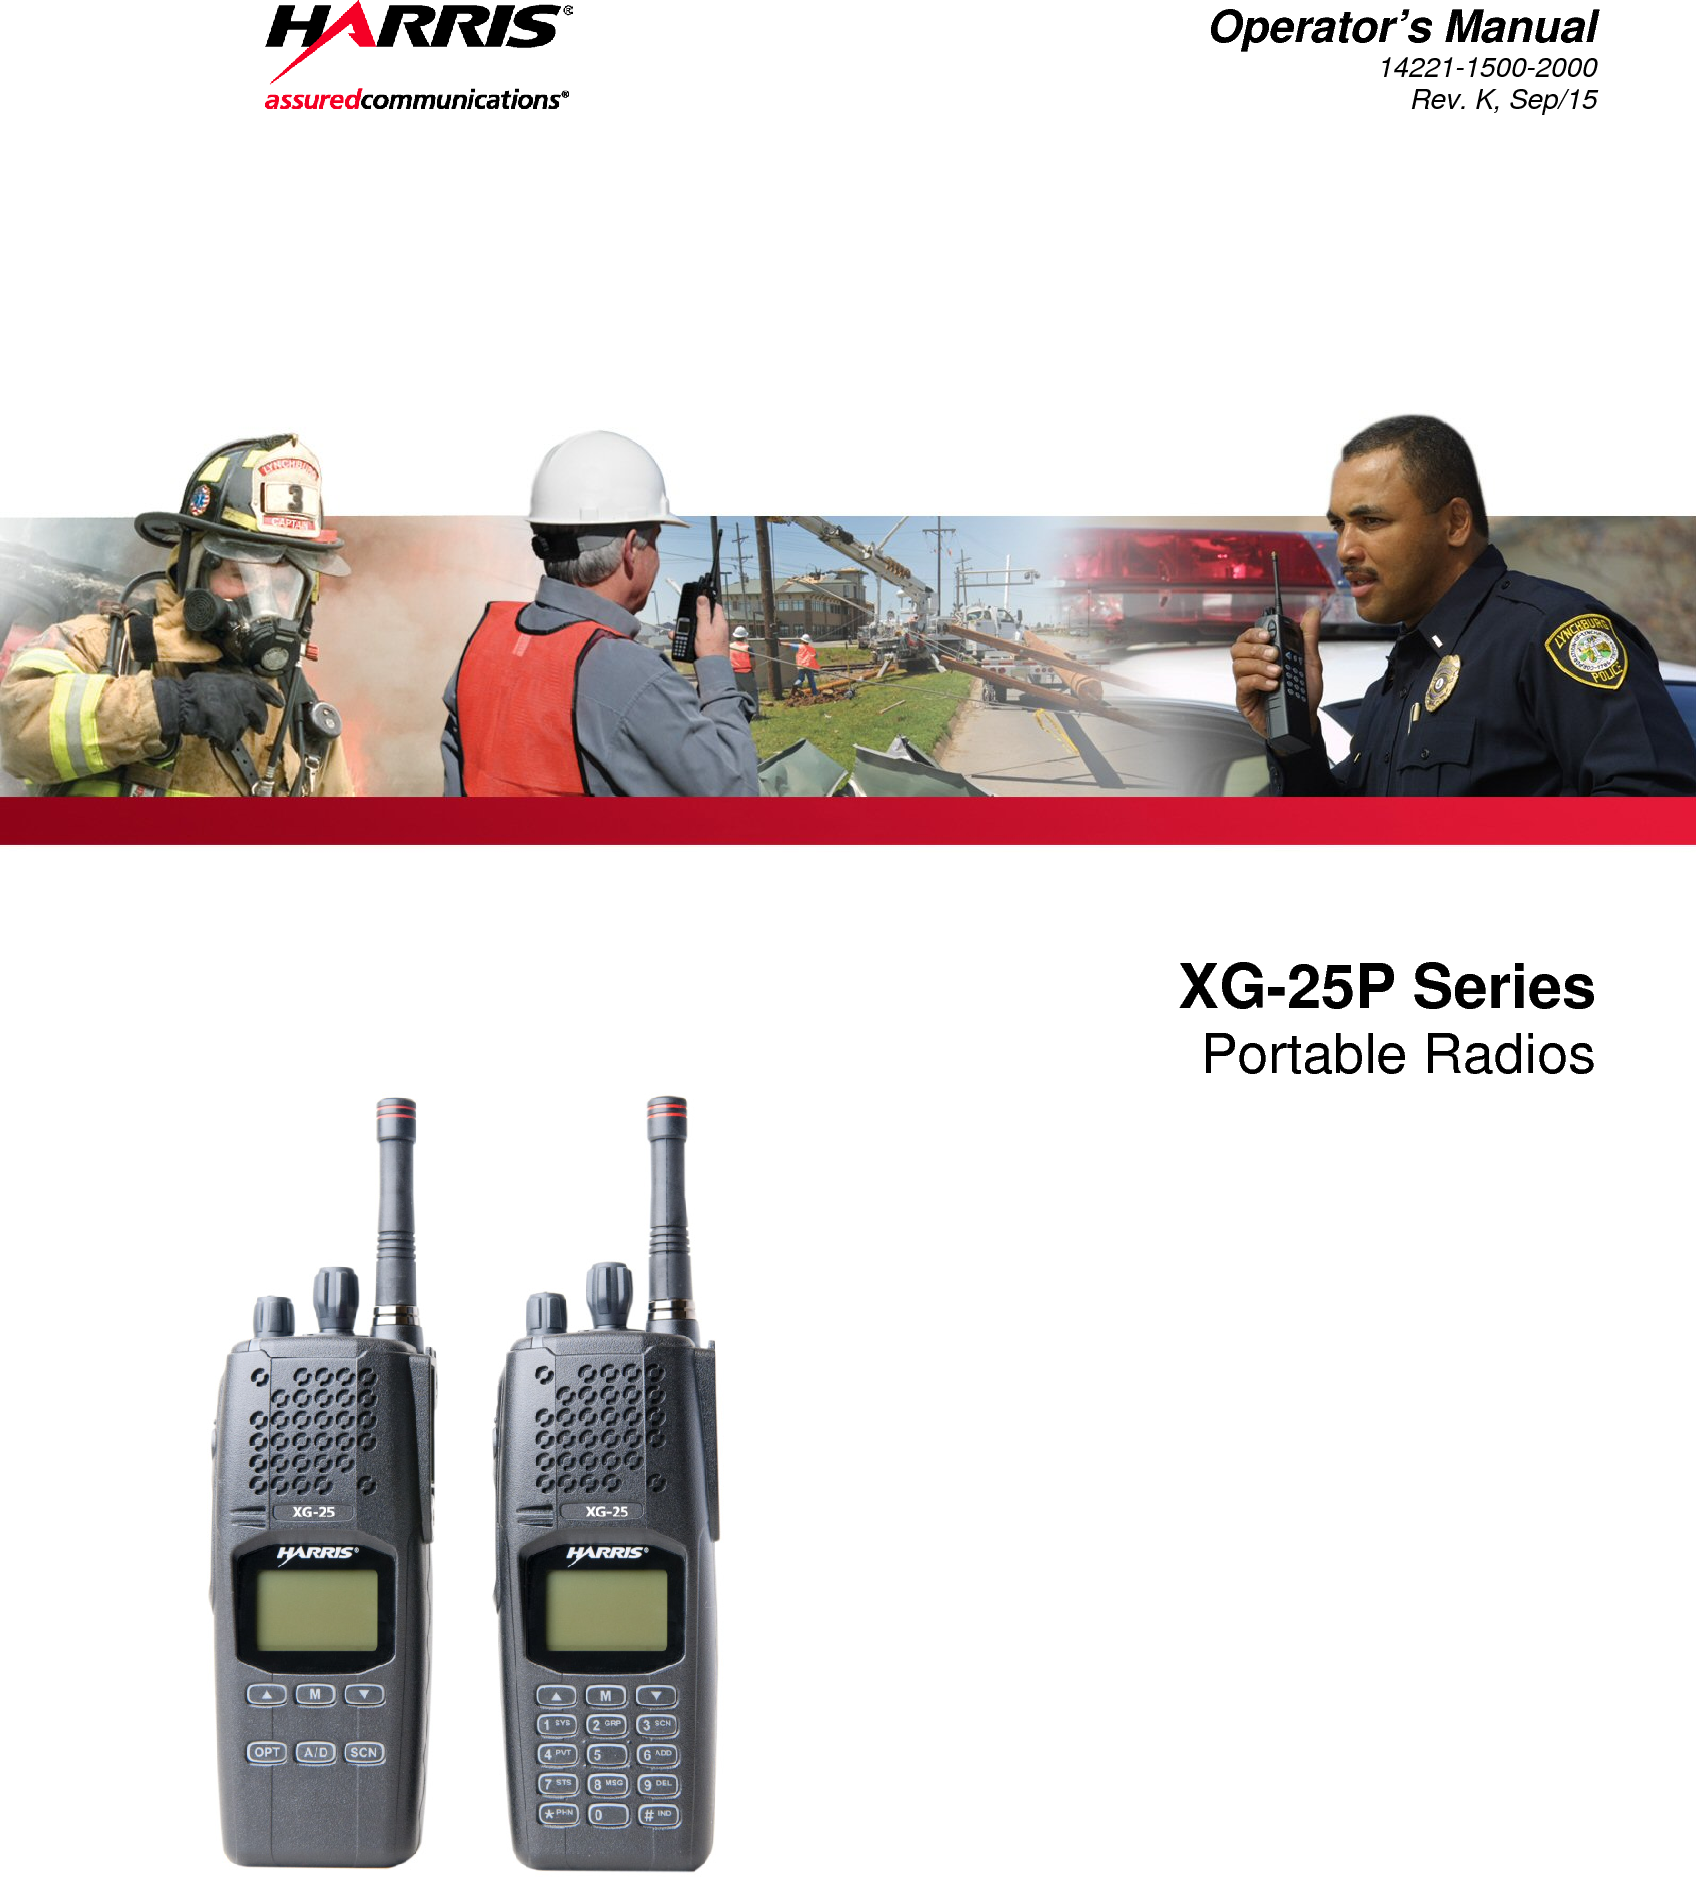  Operator’s Manual 14221-1500-2000 Rev. K, Sep/15    XG-25P Series Portable Radios  